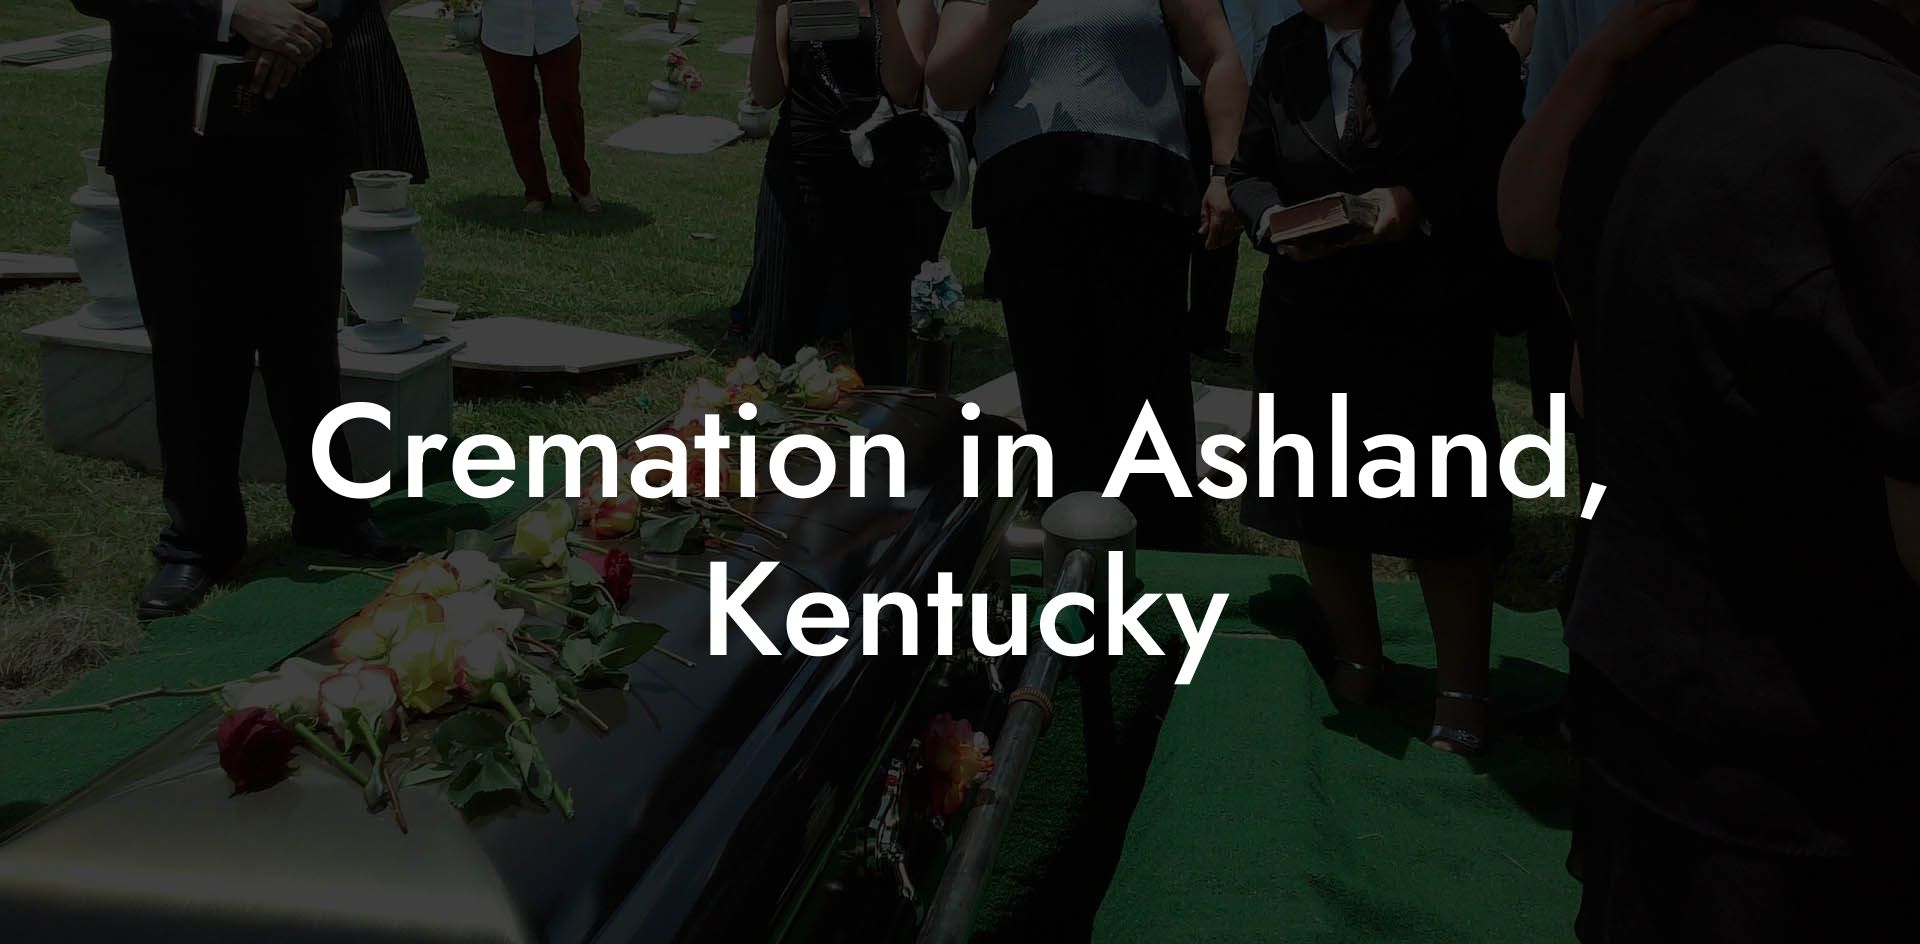 Cremation in Ashland, Kentucky